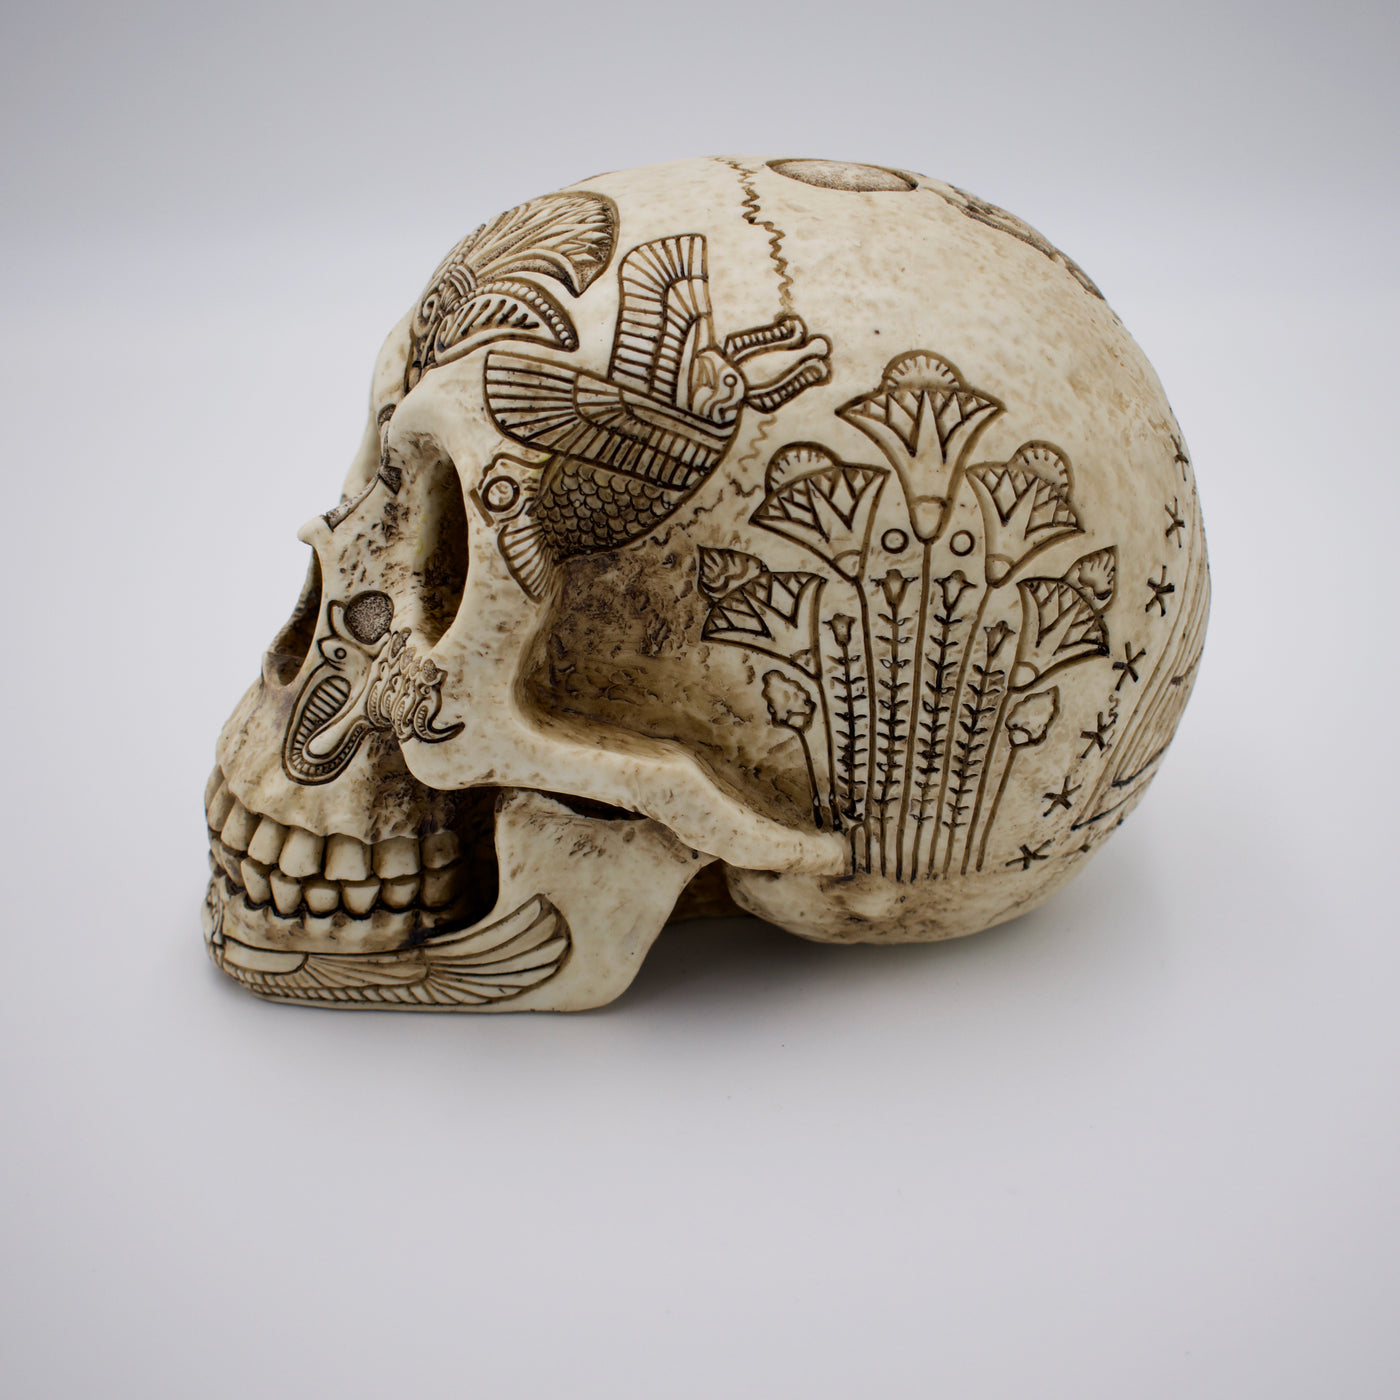 Egyptian Symbols Skull Sculpture - The Cranio Collections